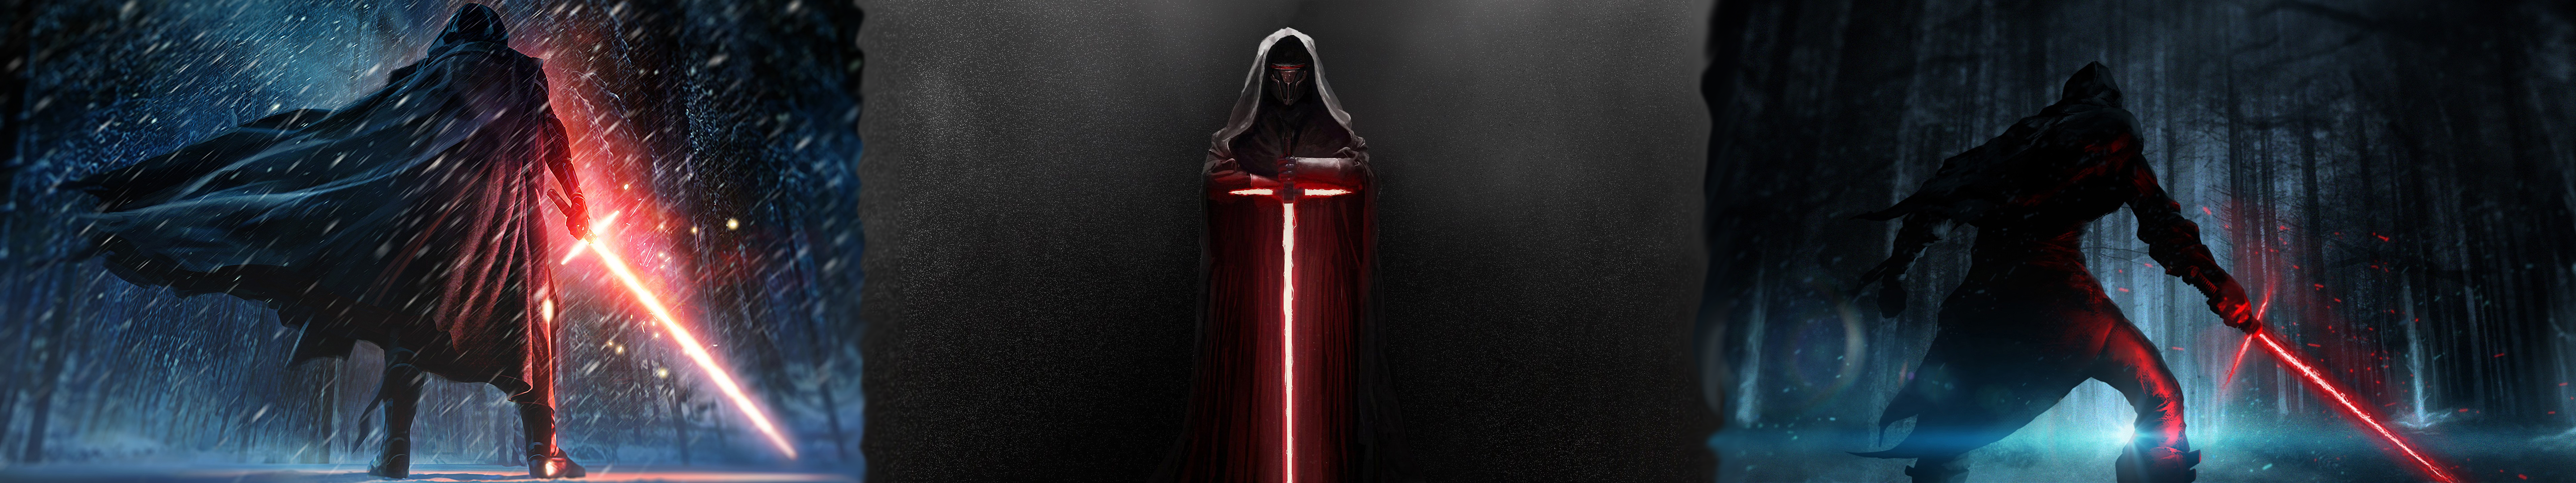 People 5760x1080 Star Wars Sith black background lightsaber dark side